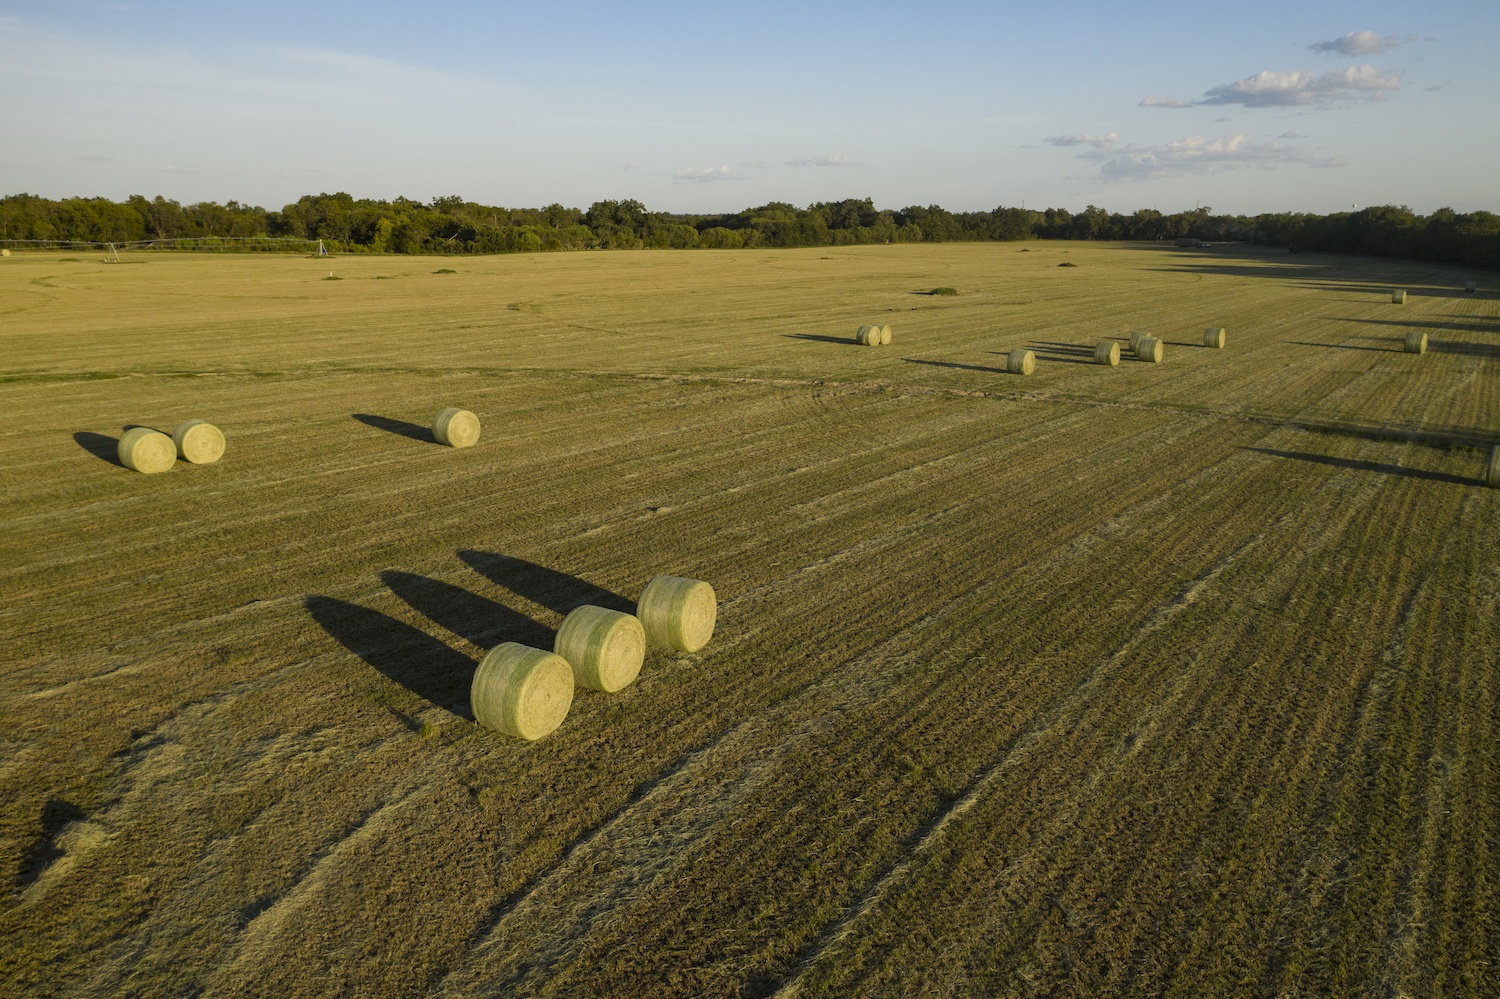 hay harvest in Macdona, TX. September 2020